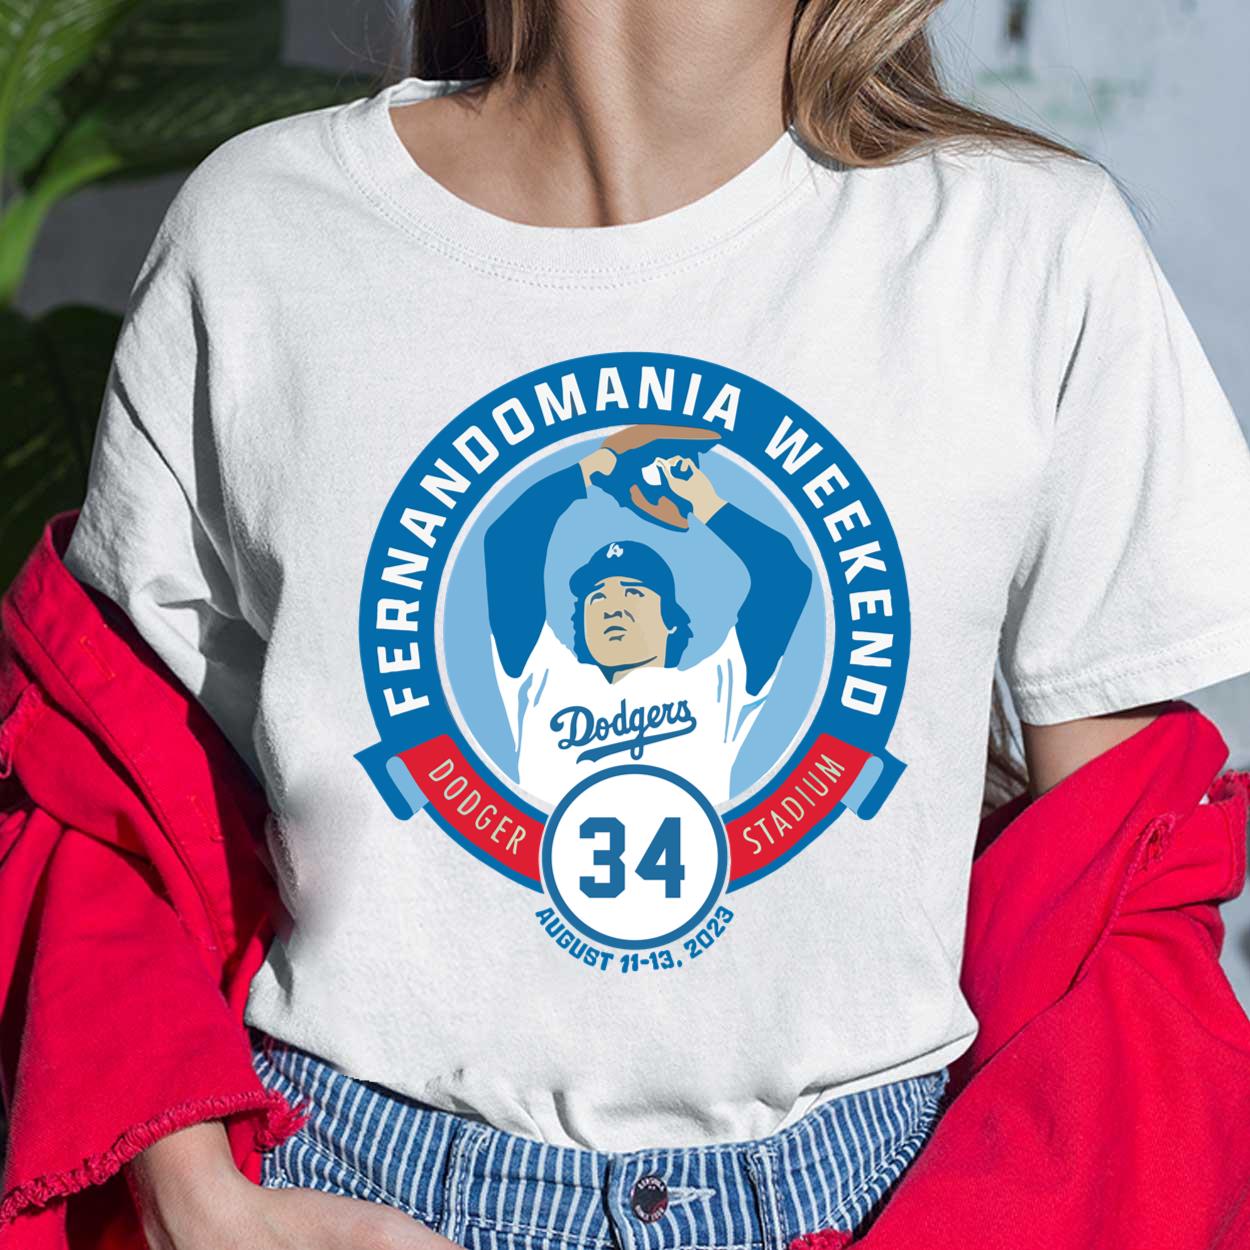 Official Los Angeles Dodgers Fernandomania Weekend 34 Shirt